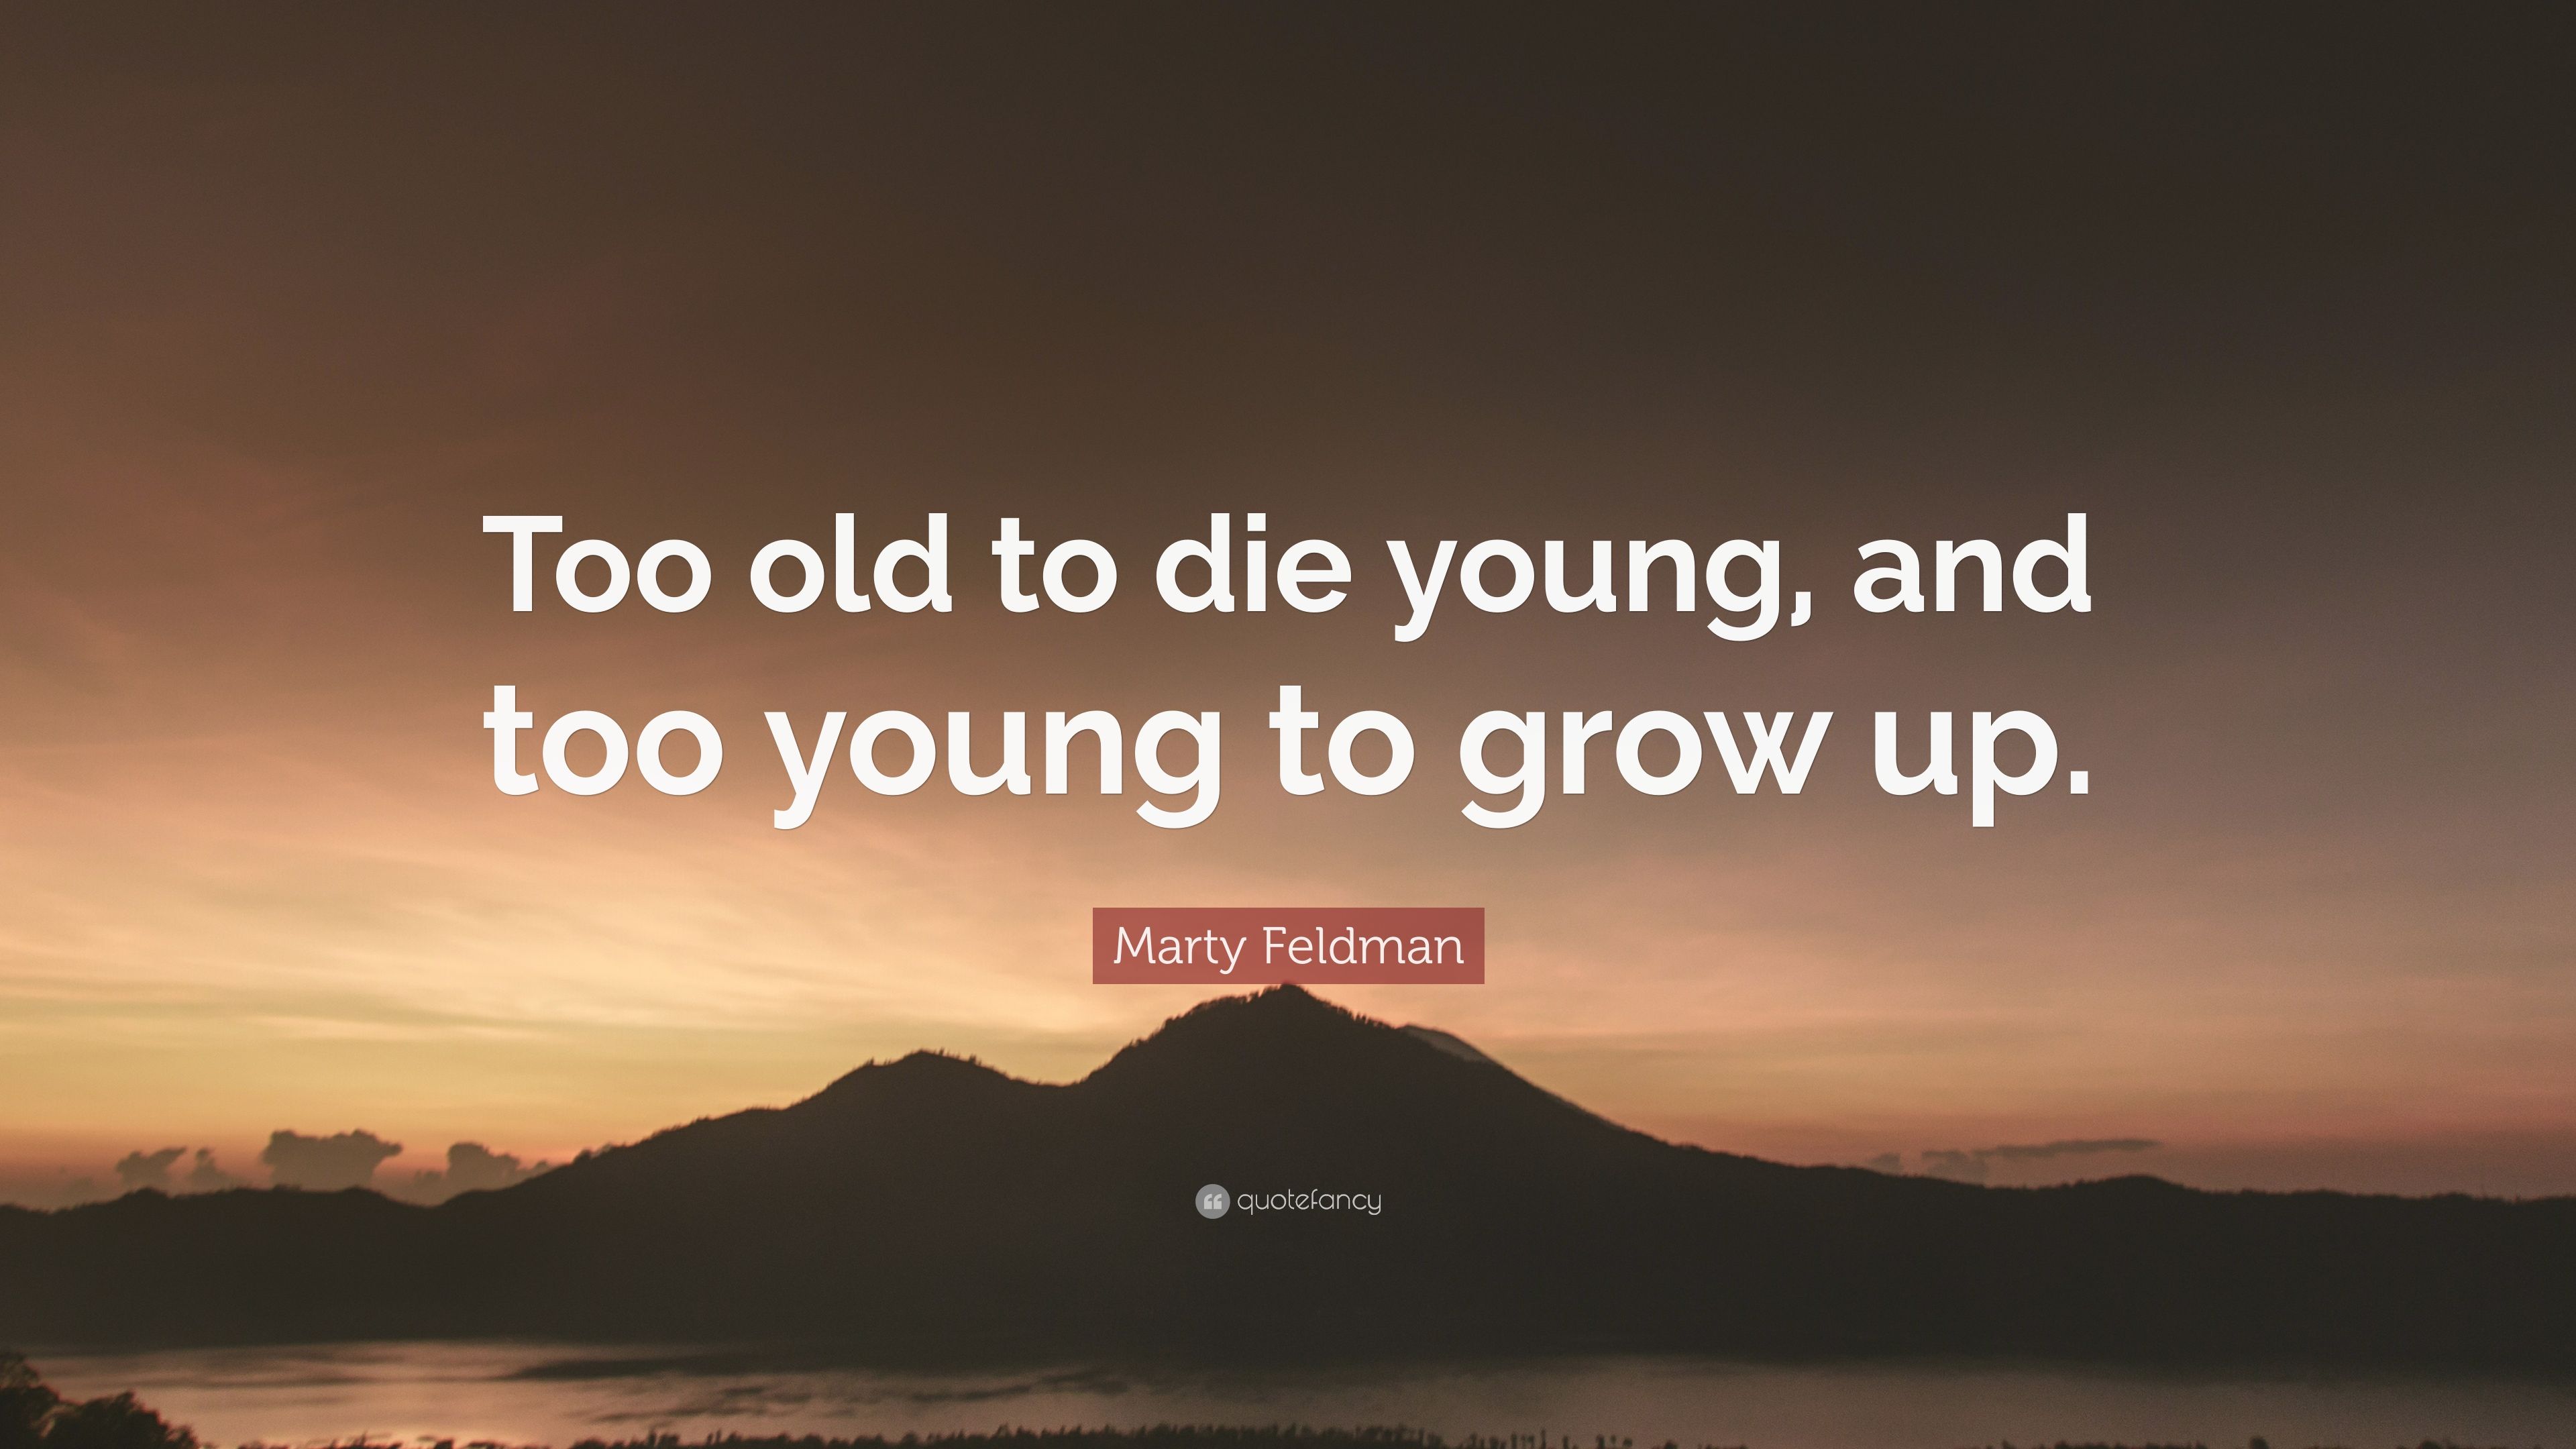 Marty Feldman Quote: “Too old to die .quotefancy.com